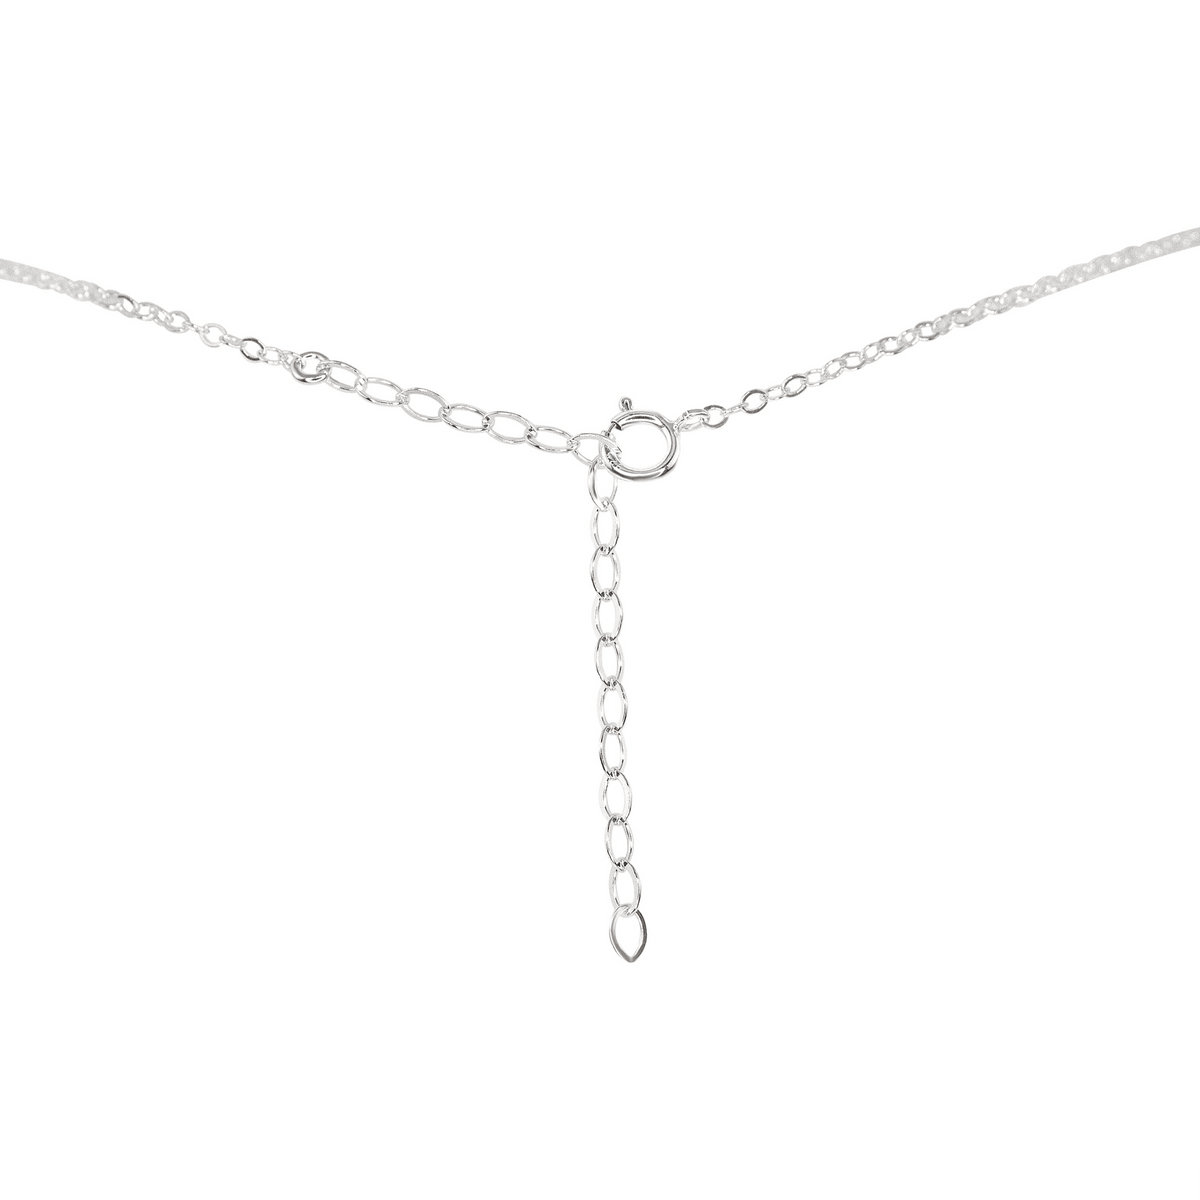 Peridot Boho Lariat Necklace - Peridot Boho Lariat Necklace - 14k Gold Fill - Luna Tide Handmade Crystal Jewellery